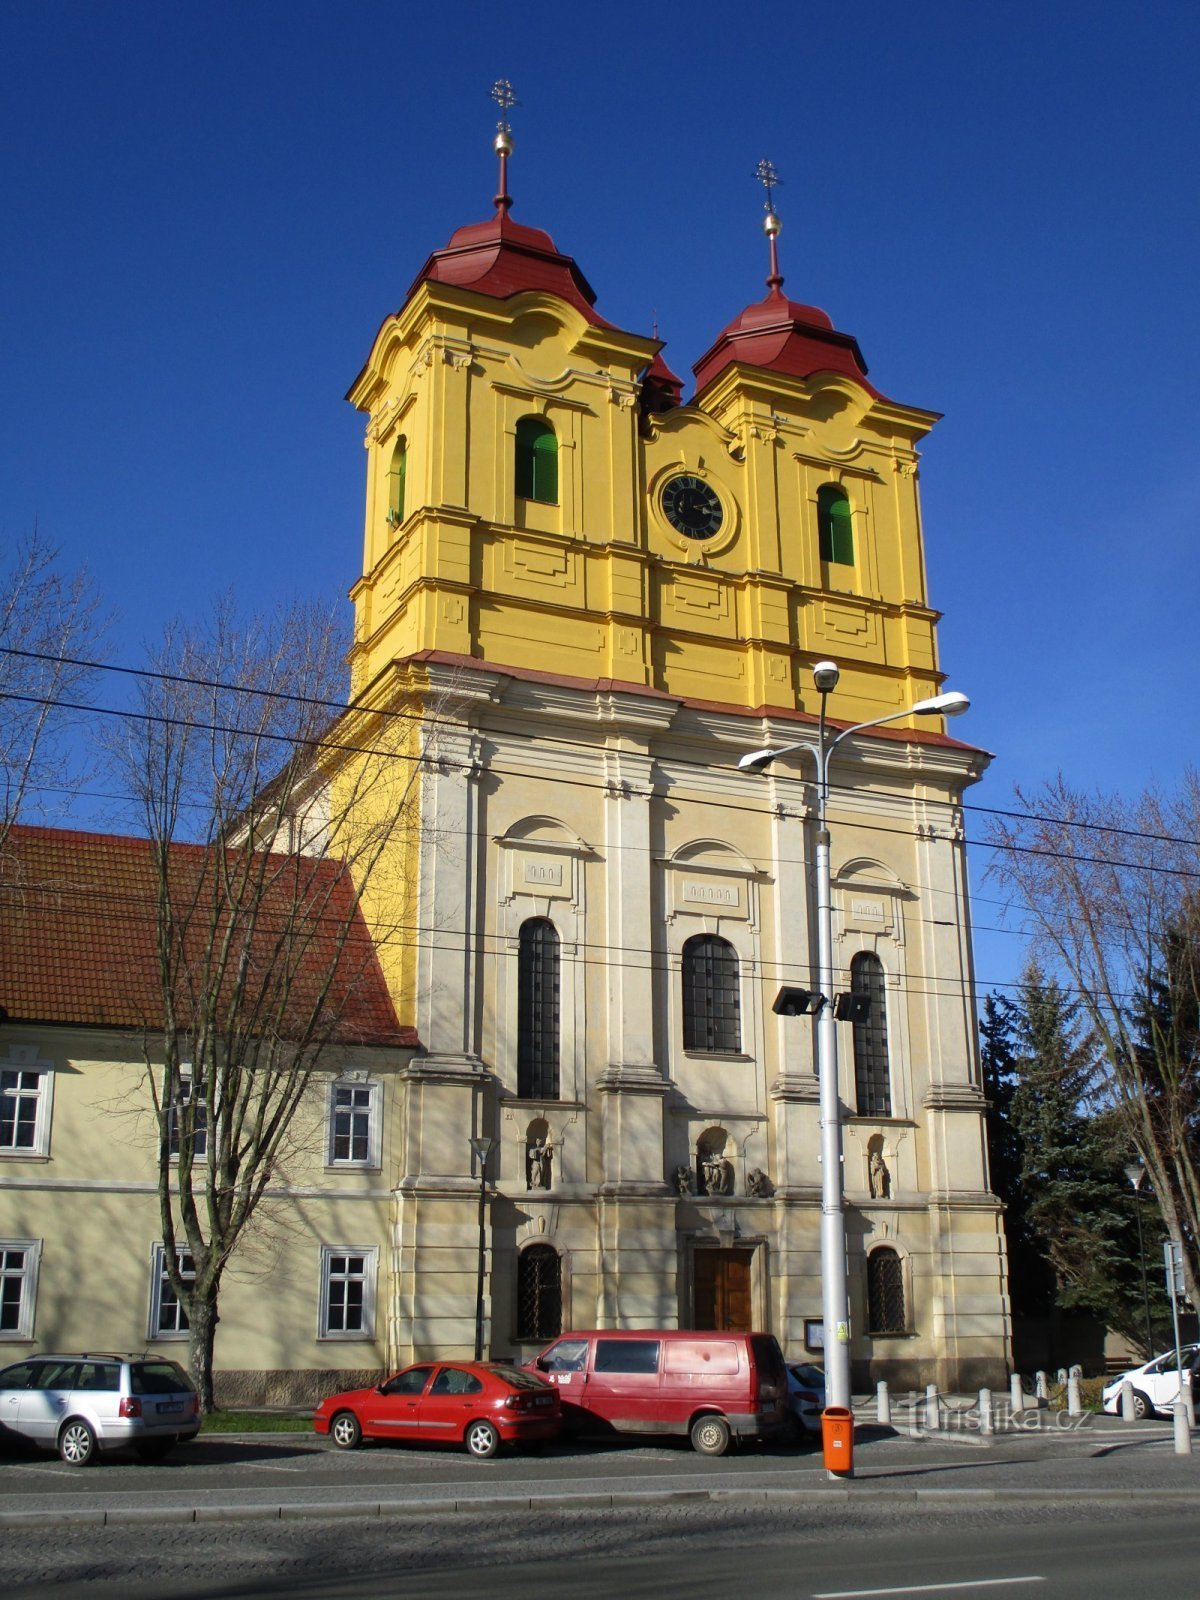 Nhà thờ St. Anne ở Kukleny (Hradec Králové, 15.3.2020/XNUMX/XNUMX)